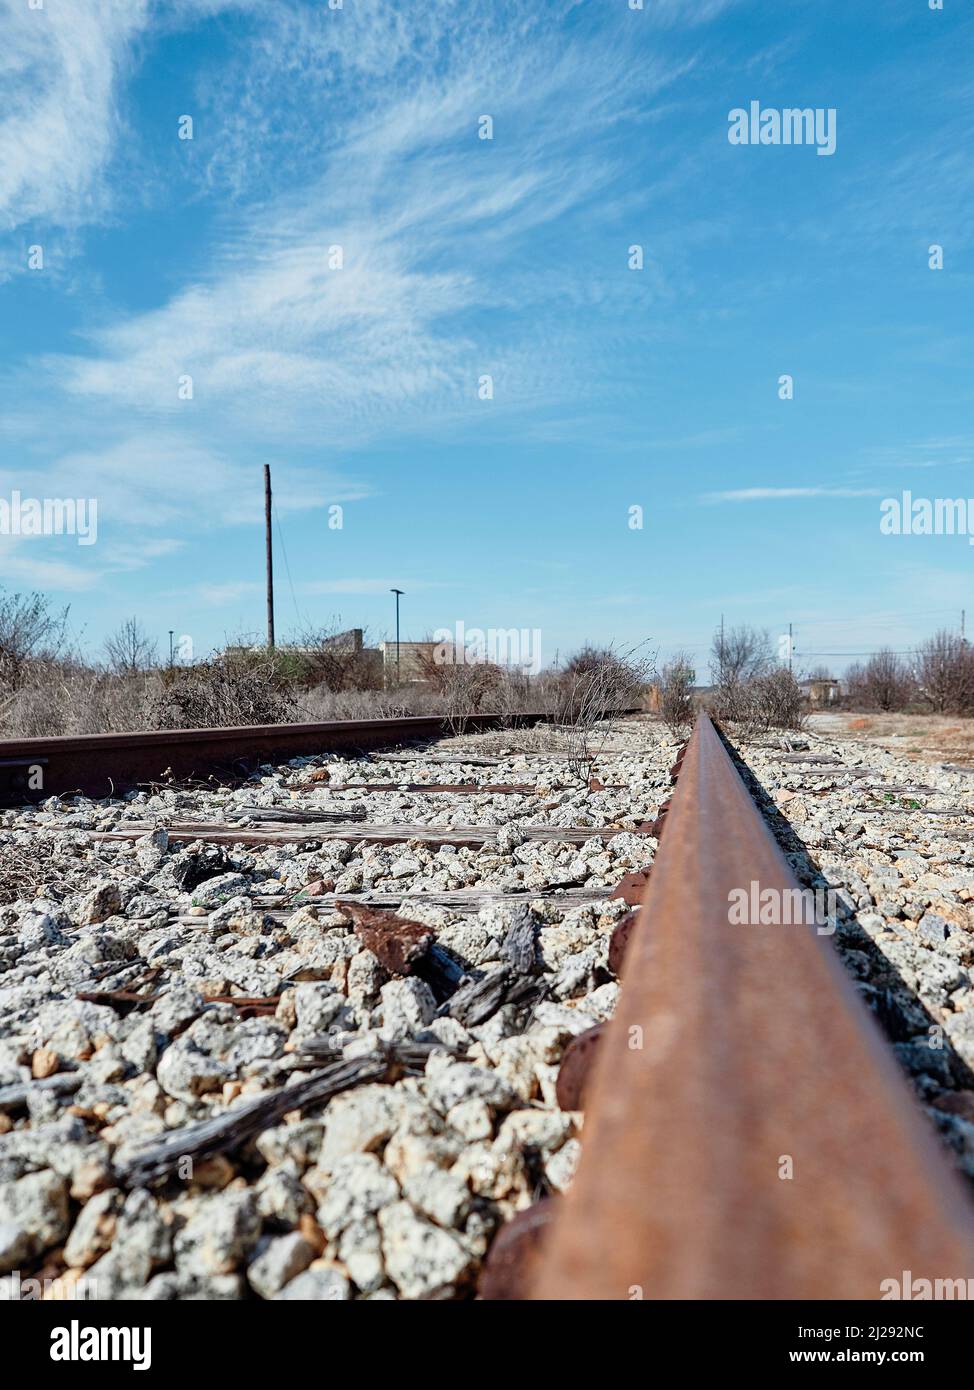 Abandoned railroad or railway track or tracks in urban Montgomery, Alabama USA. Stock Photo